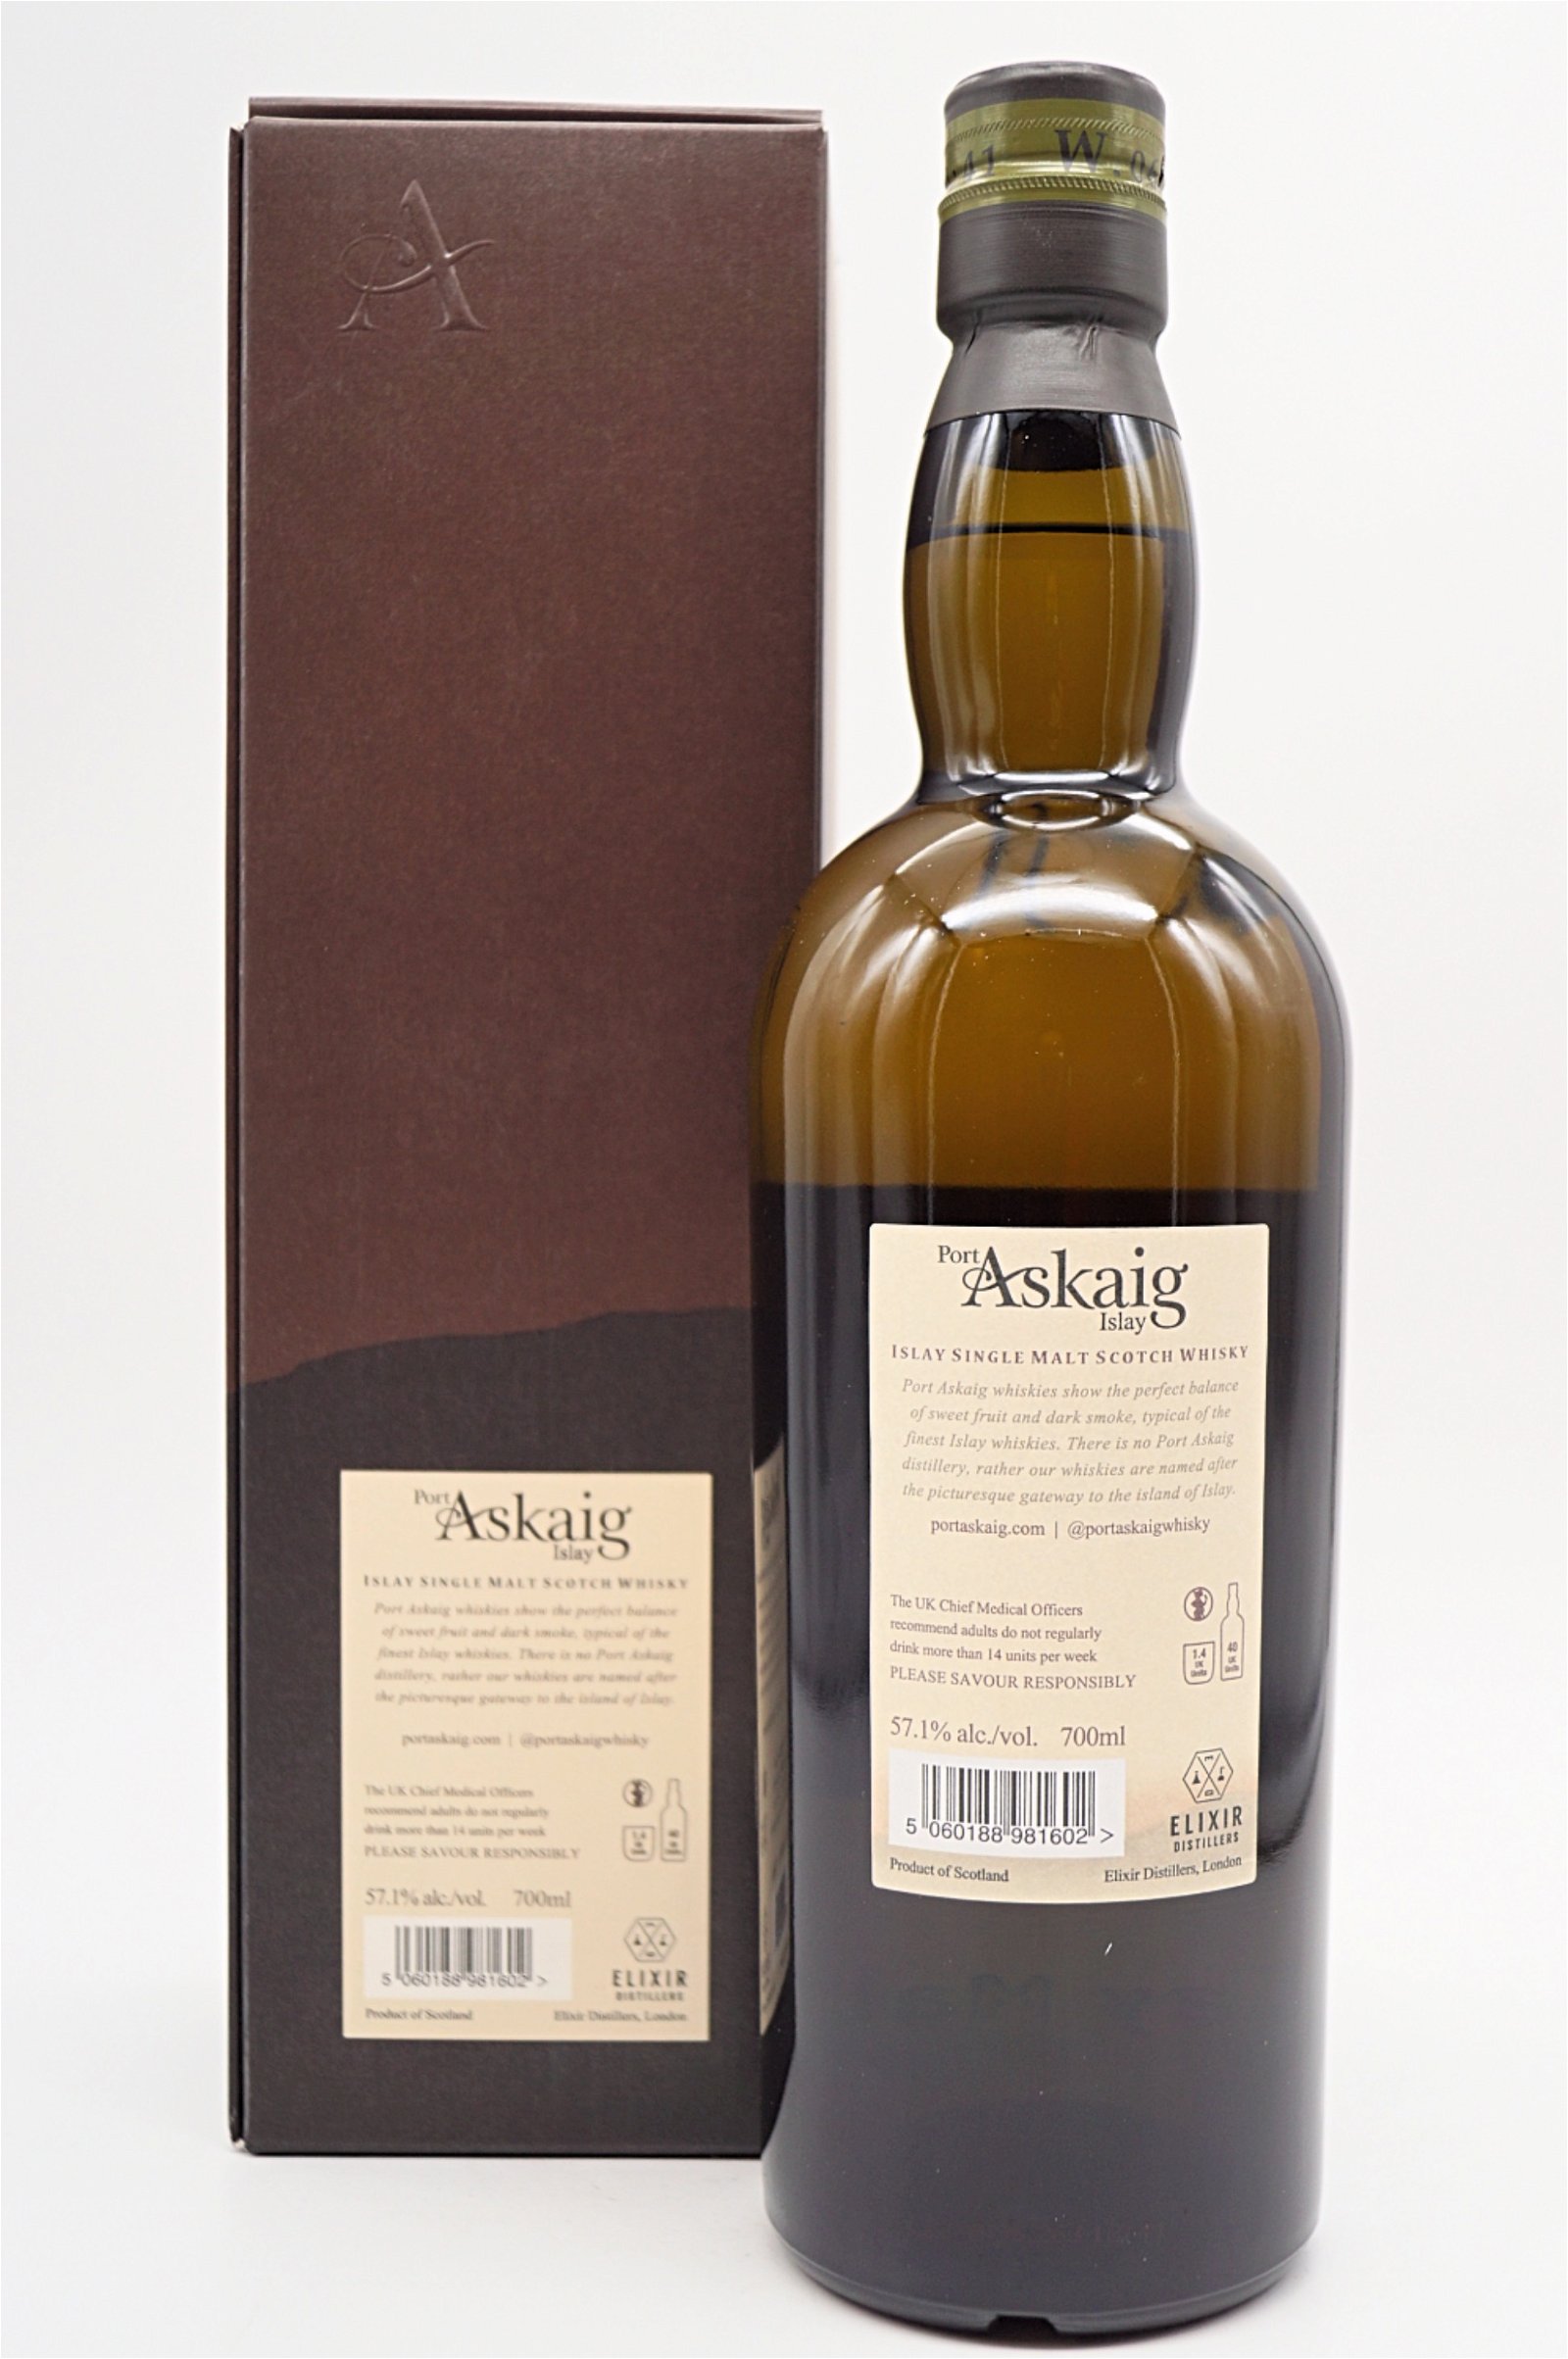 Port Askaig 100 Proof Single Malt Scotch Whisky